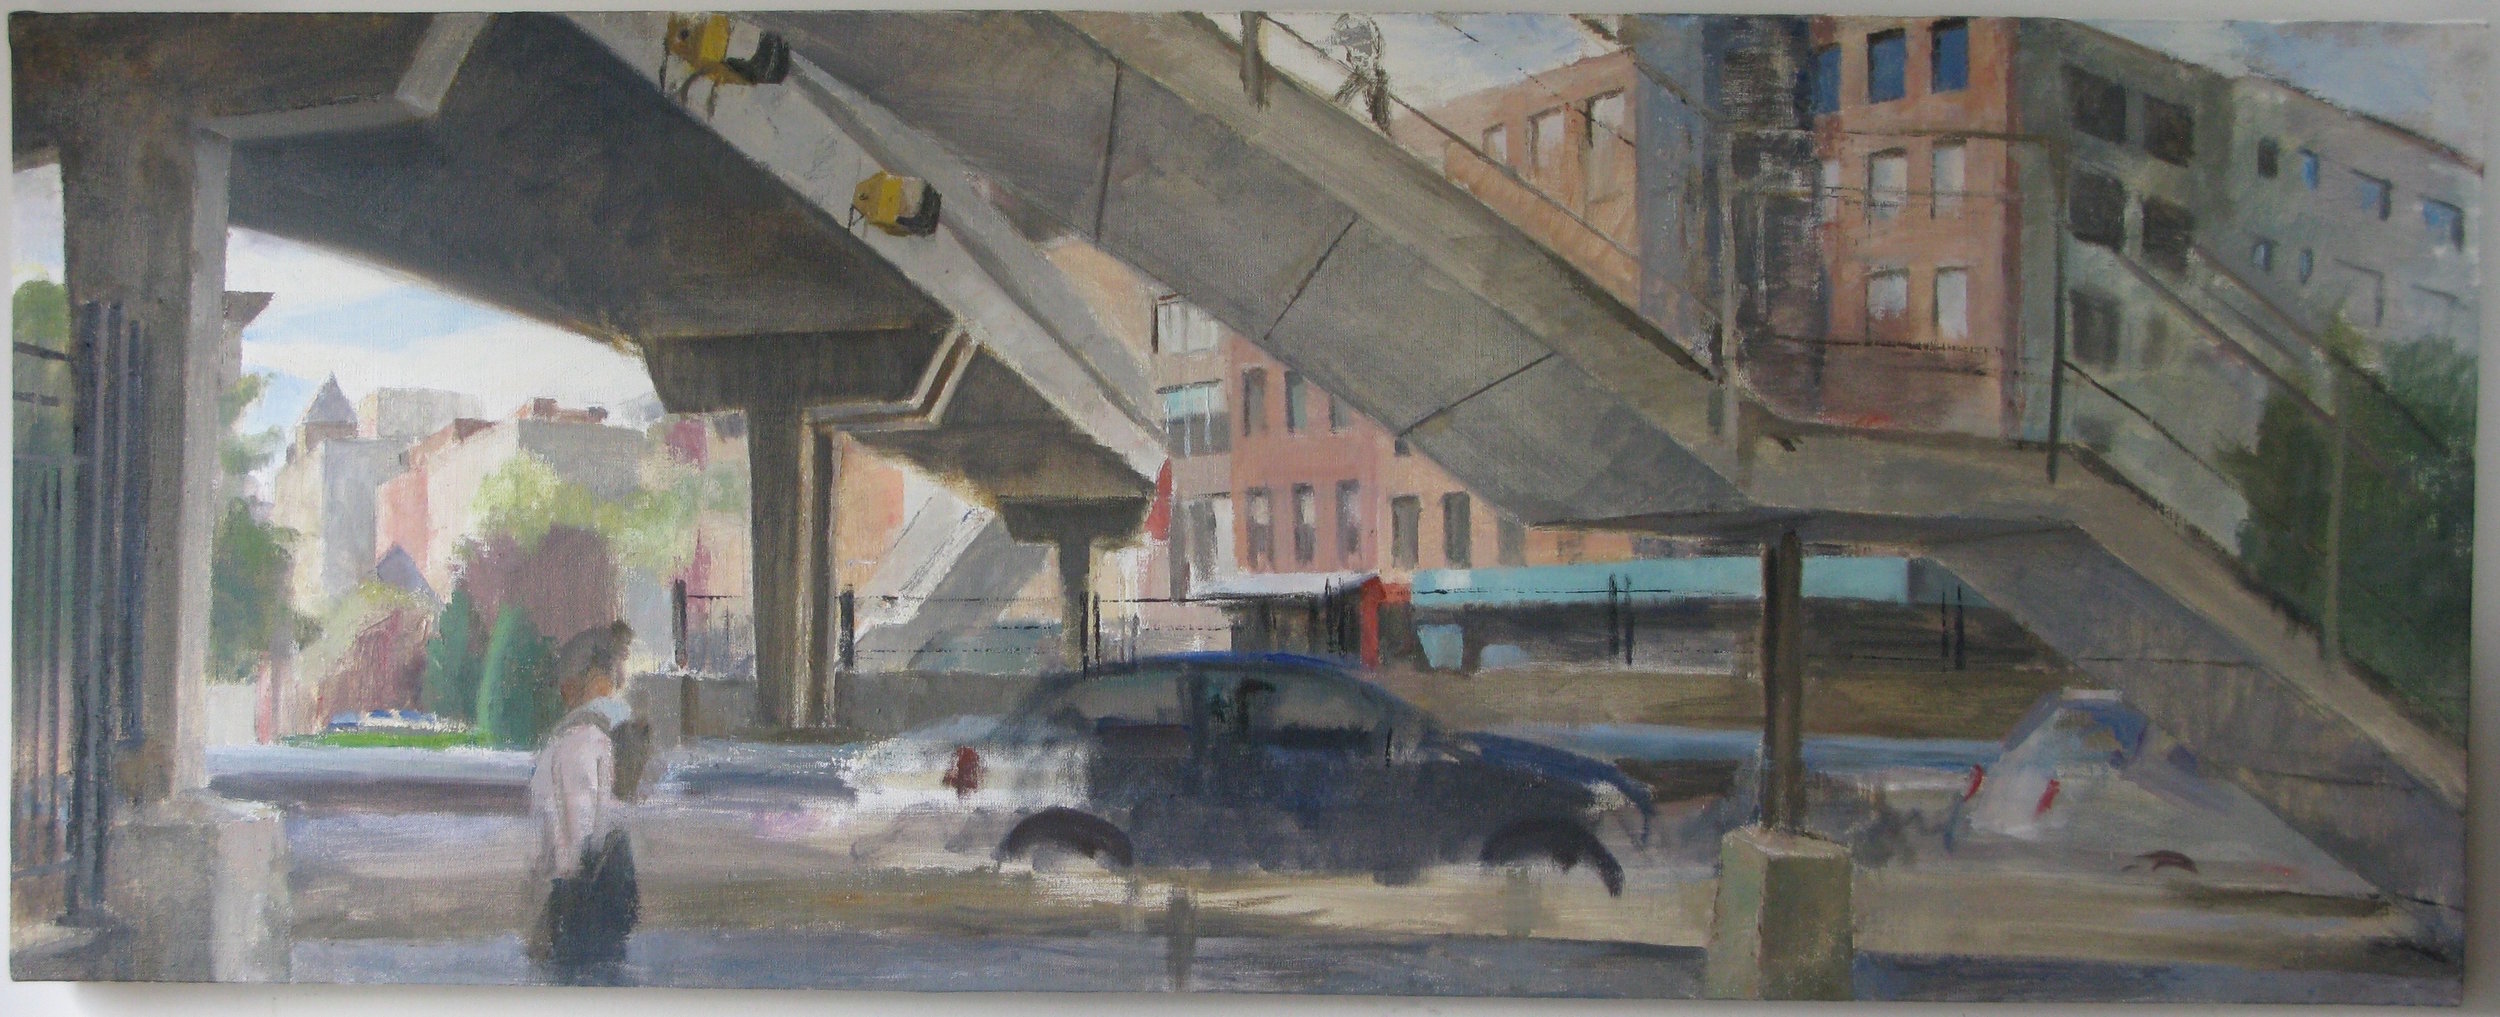 Laight Street Pedestrian Bridge, 22" x 55", oil on linen, 2014.